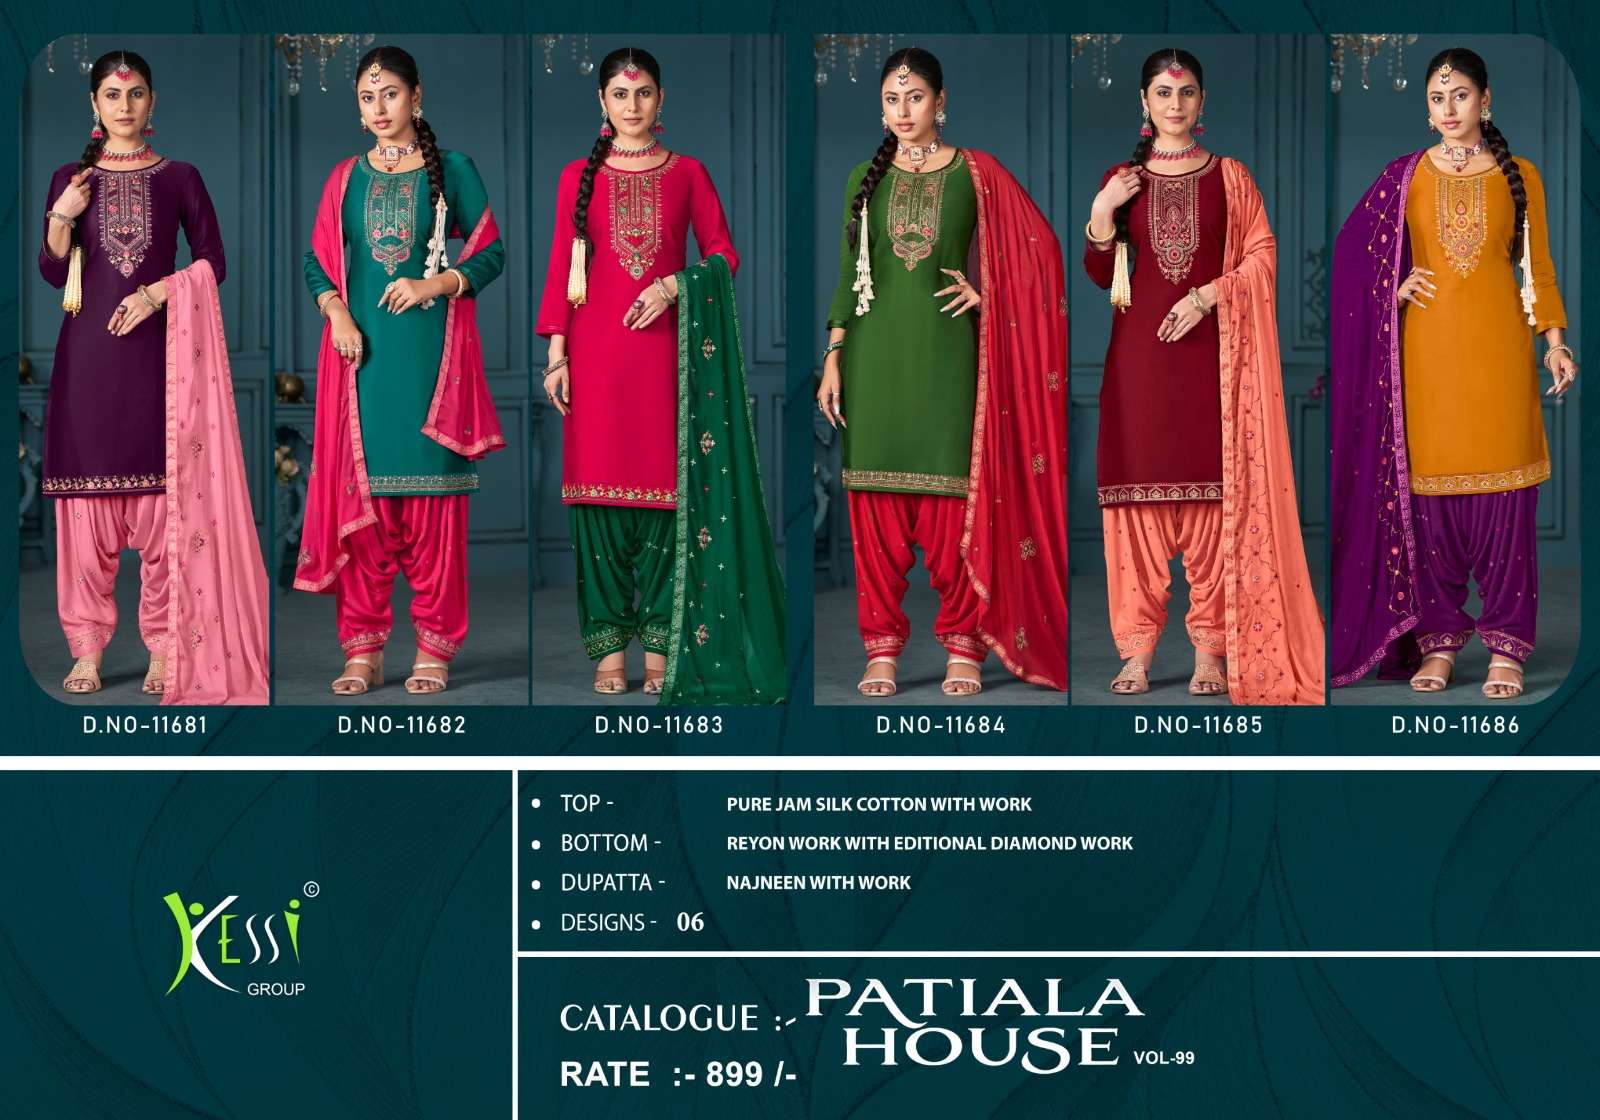 kessi patiala house vol 99 jam silk regal look salwar suit catalog